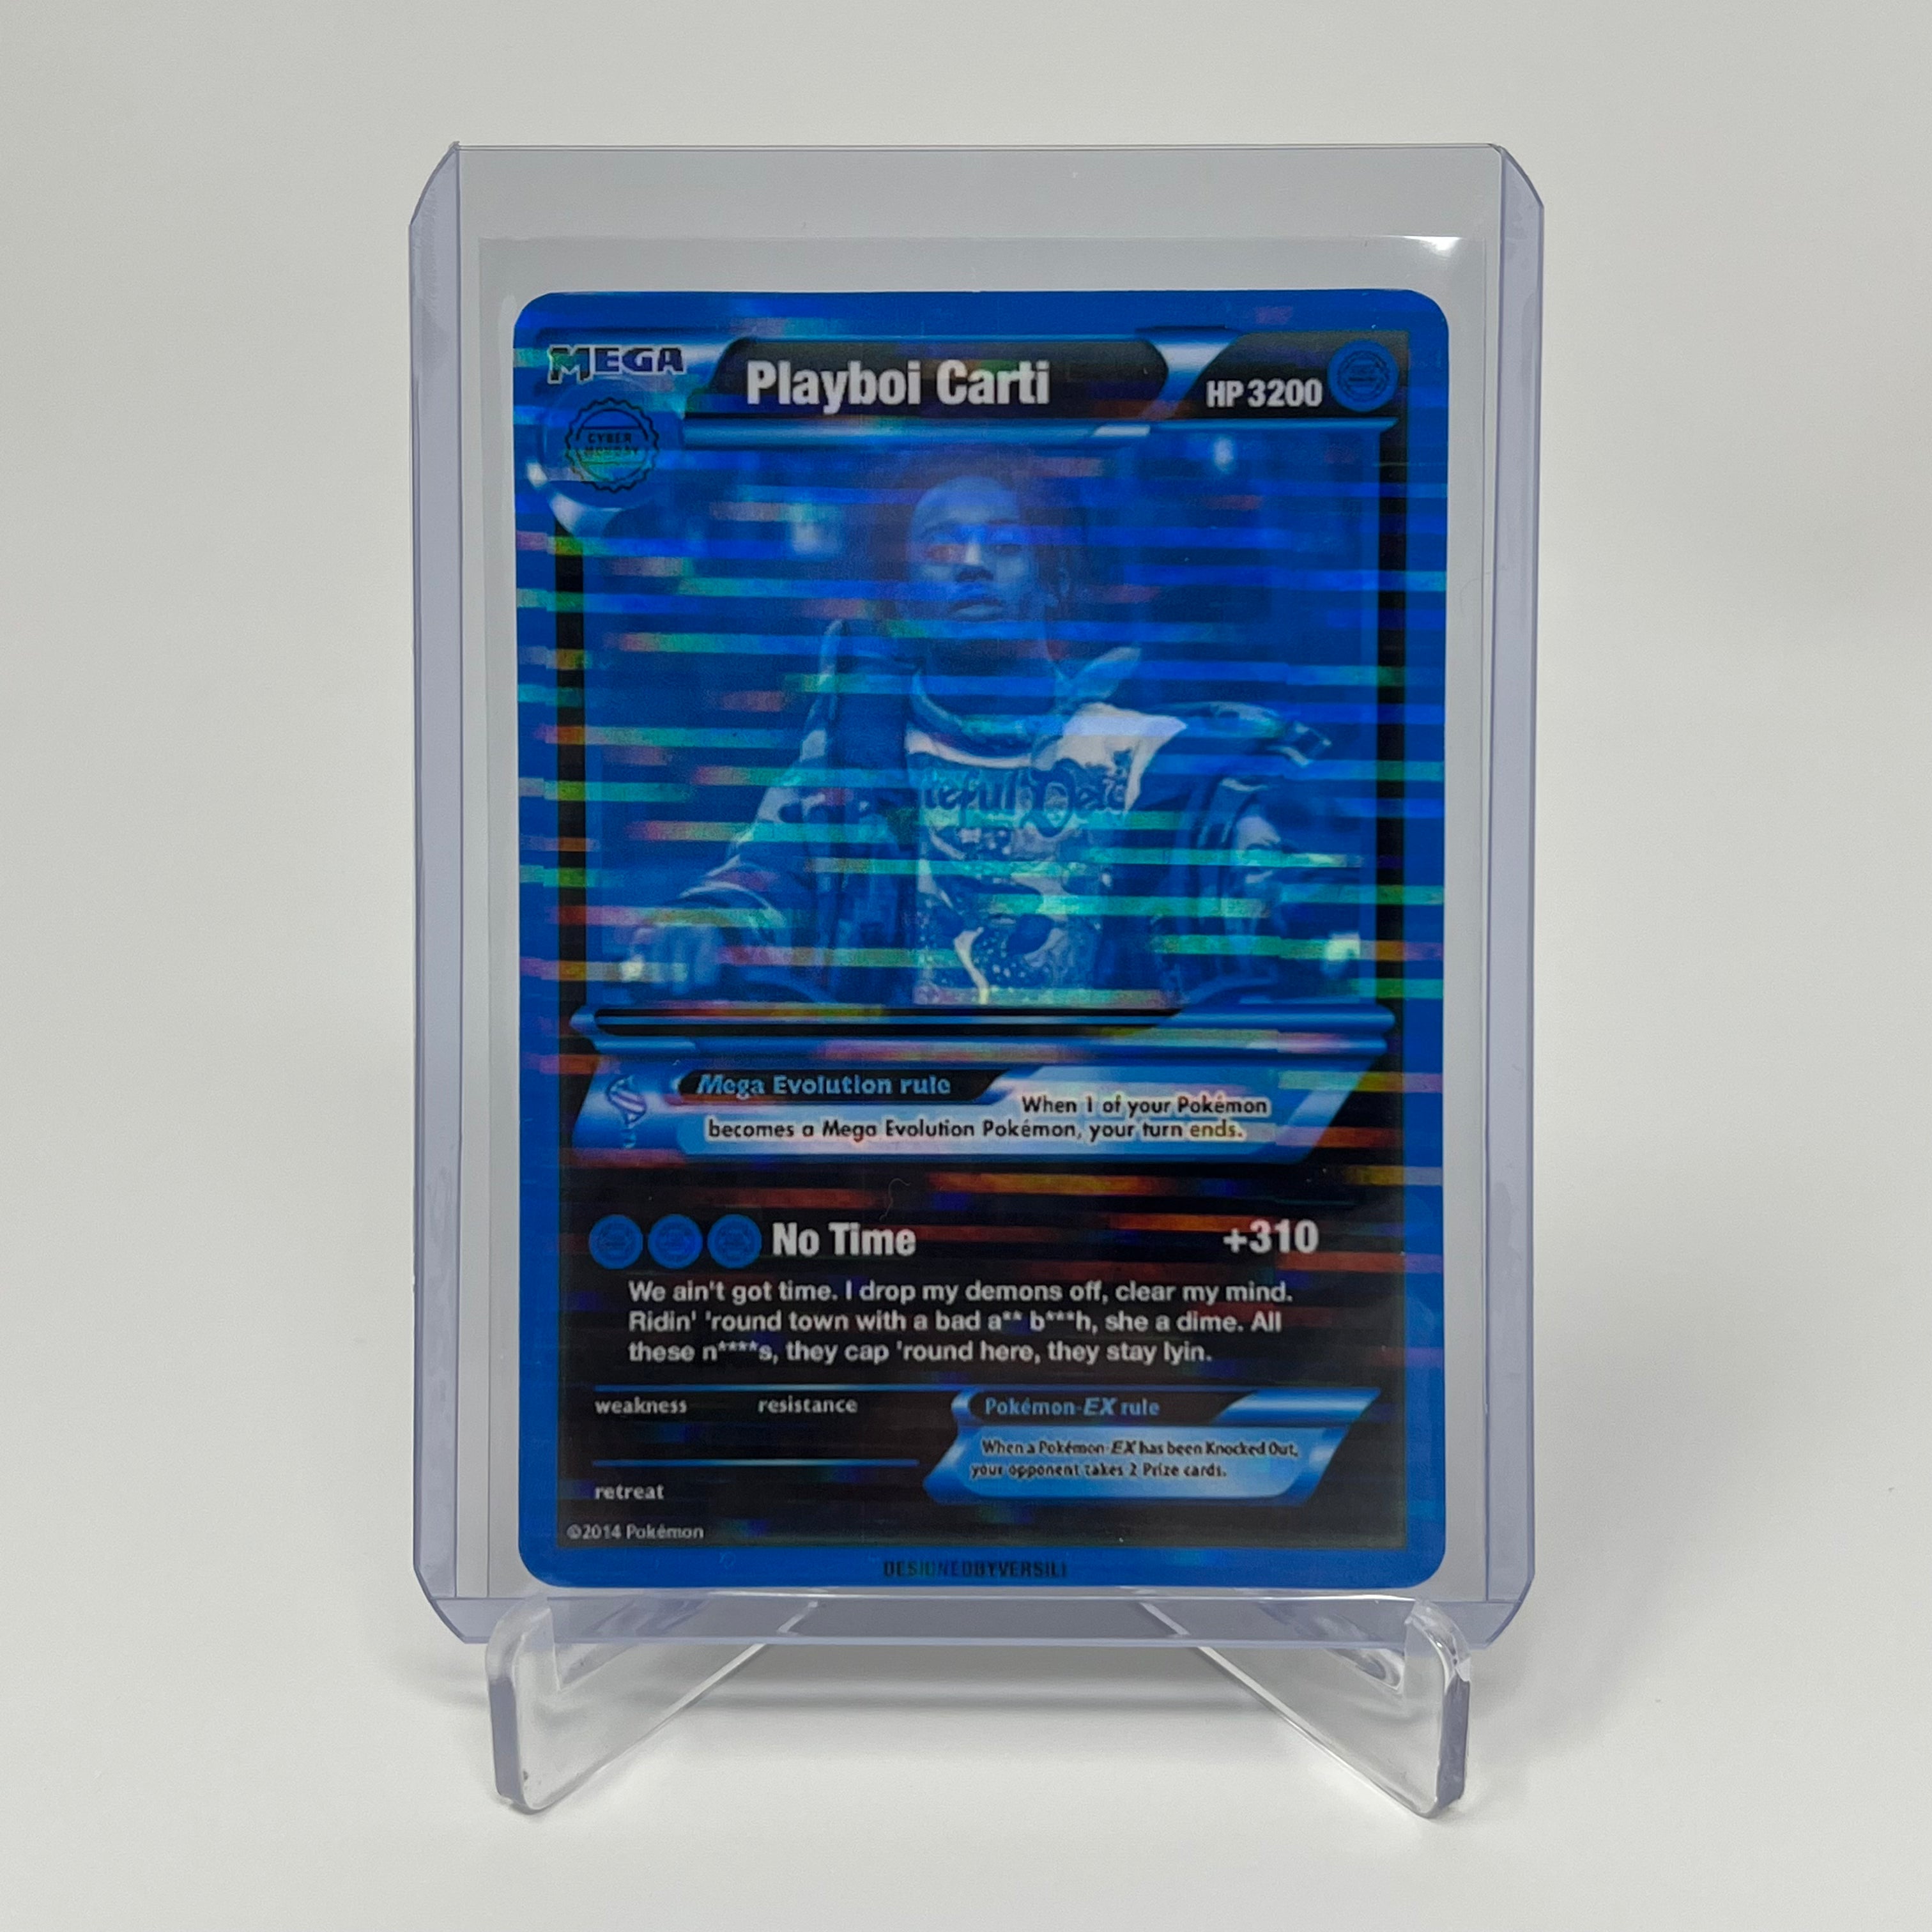 Playboi Carti Pokémon Card (Cyber Monday)